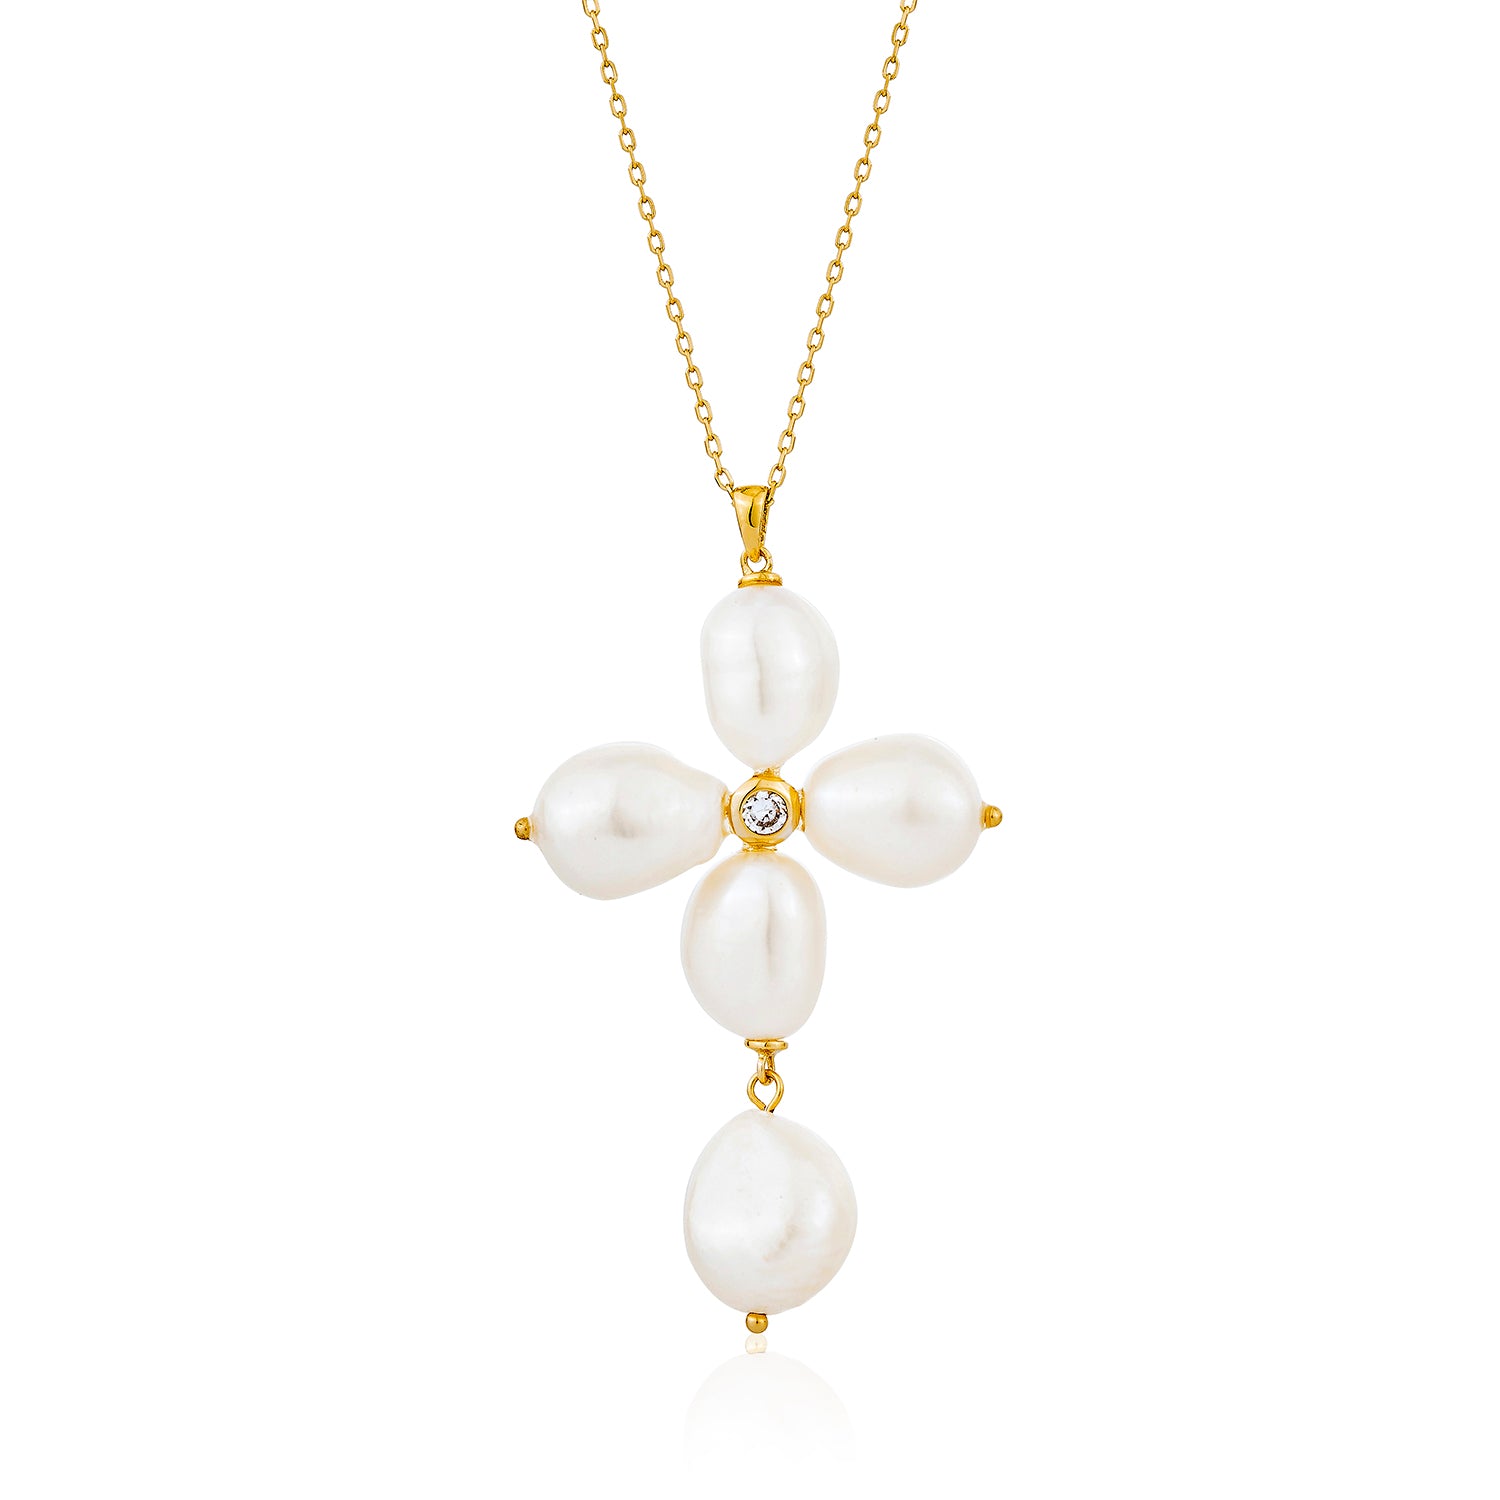 Meri Cross Necklace - Gold